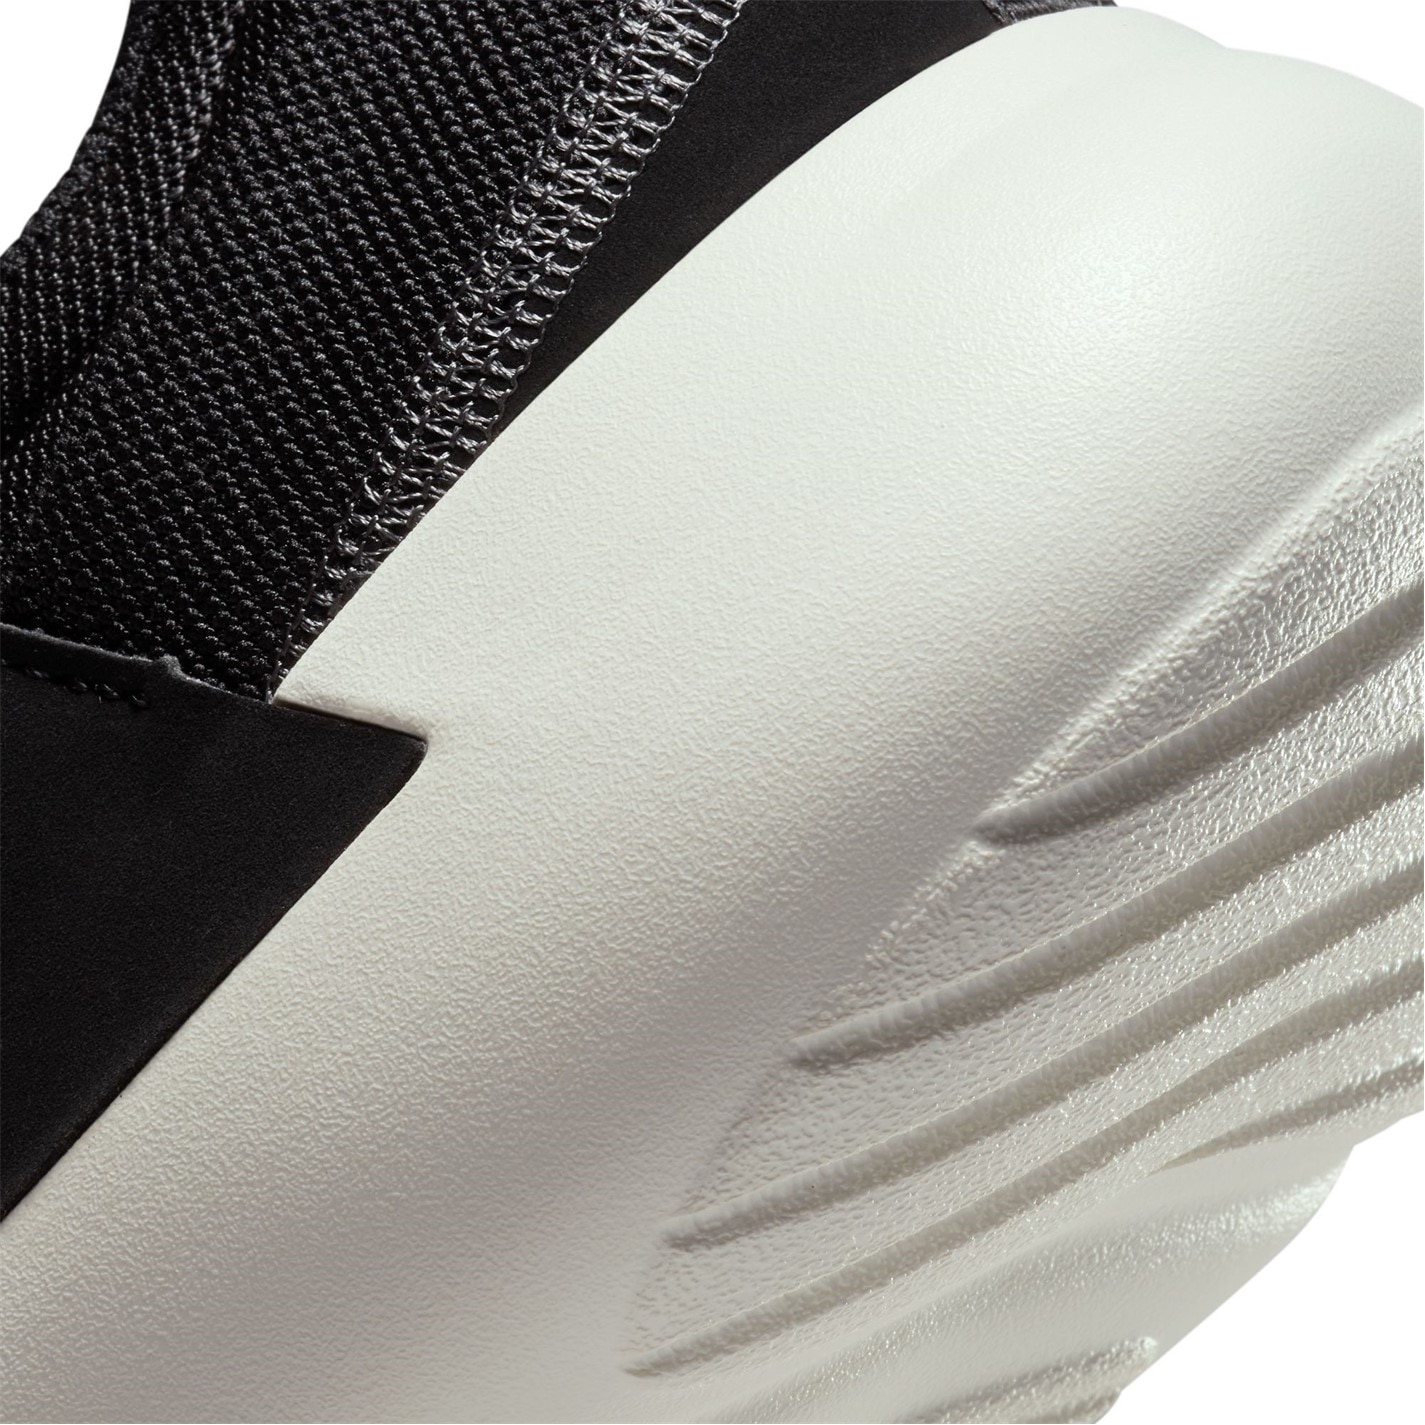 Pantof sport Nike E-Series AD barbat